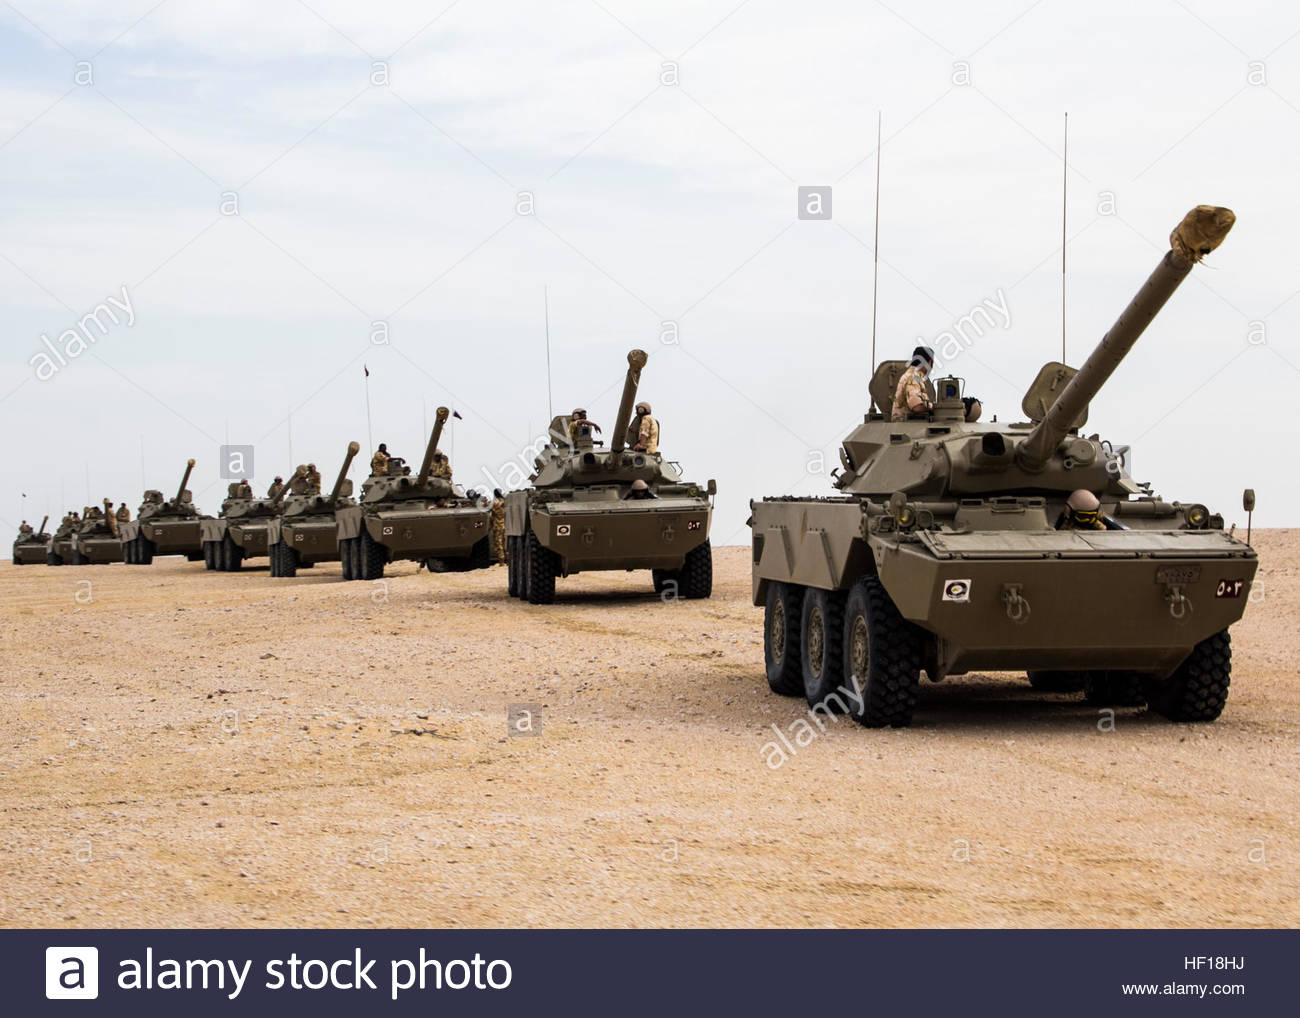 tanks-assigned-the-qatar-emiri-land-forces-in-al-galail-qatar-april-HF18HJ.jpg